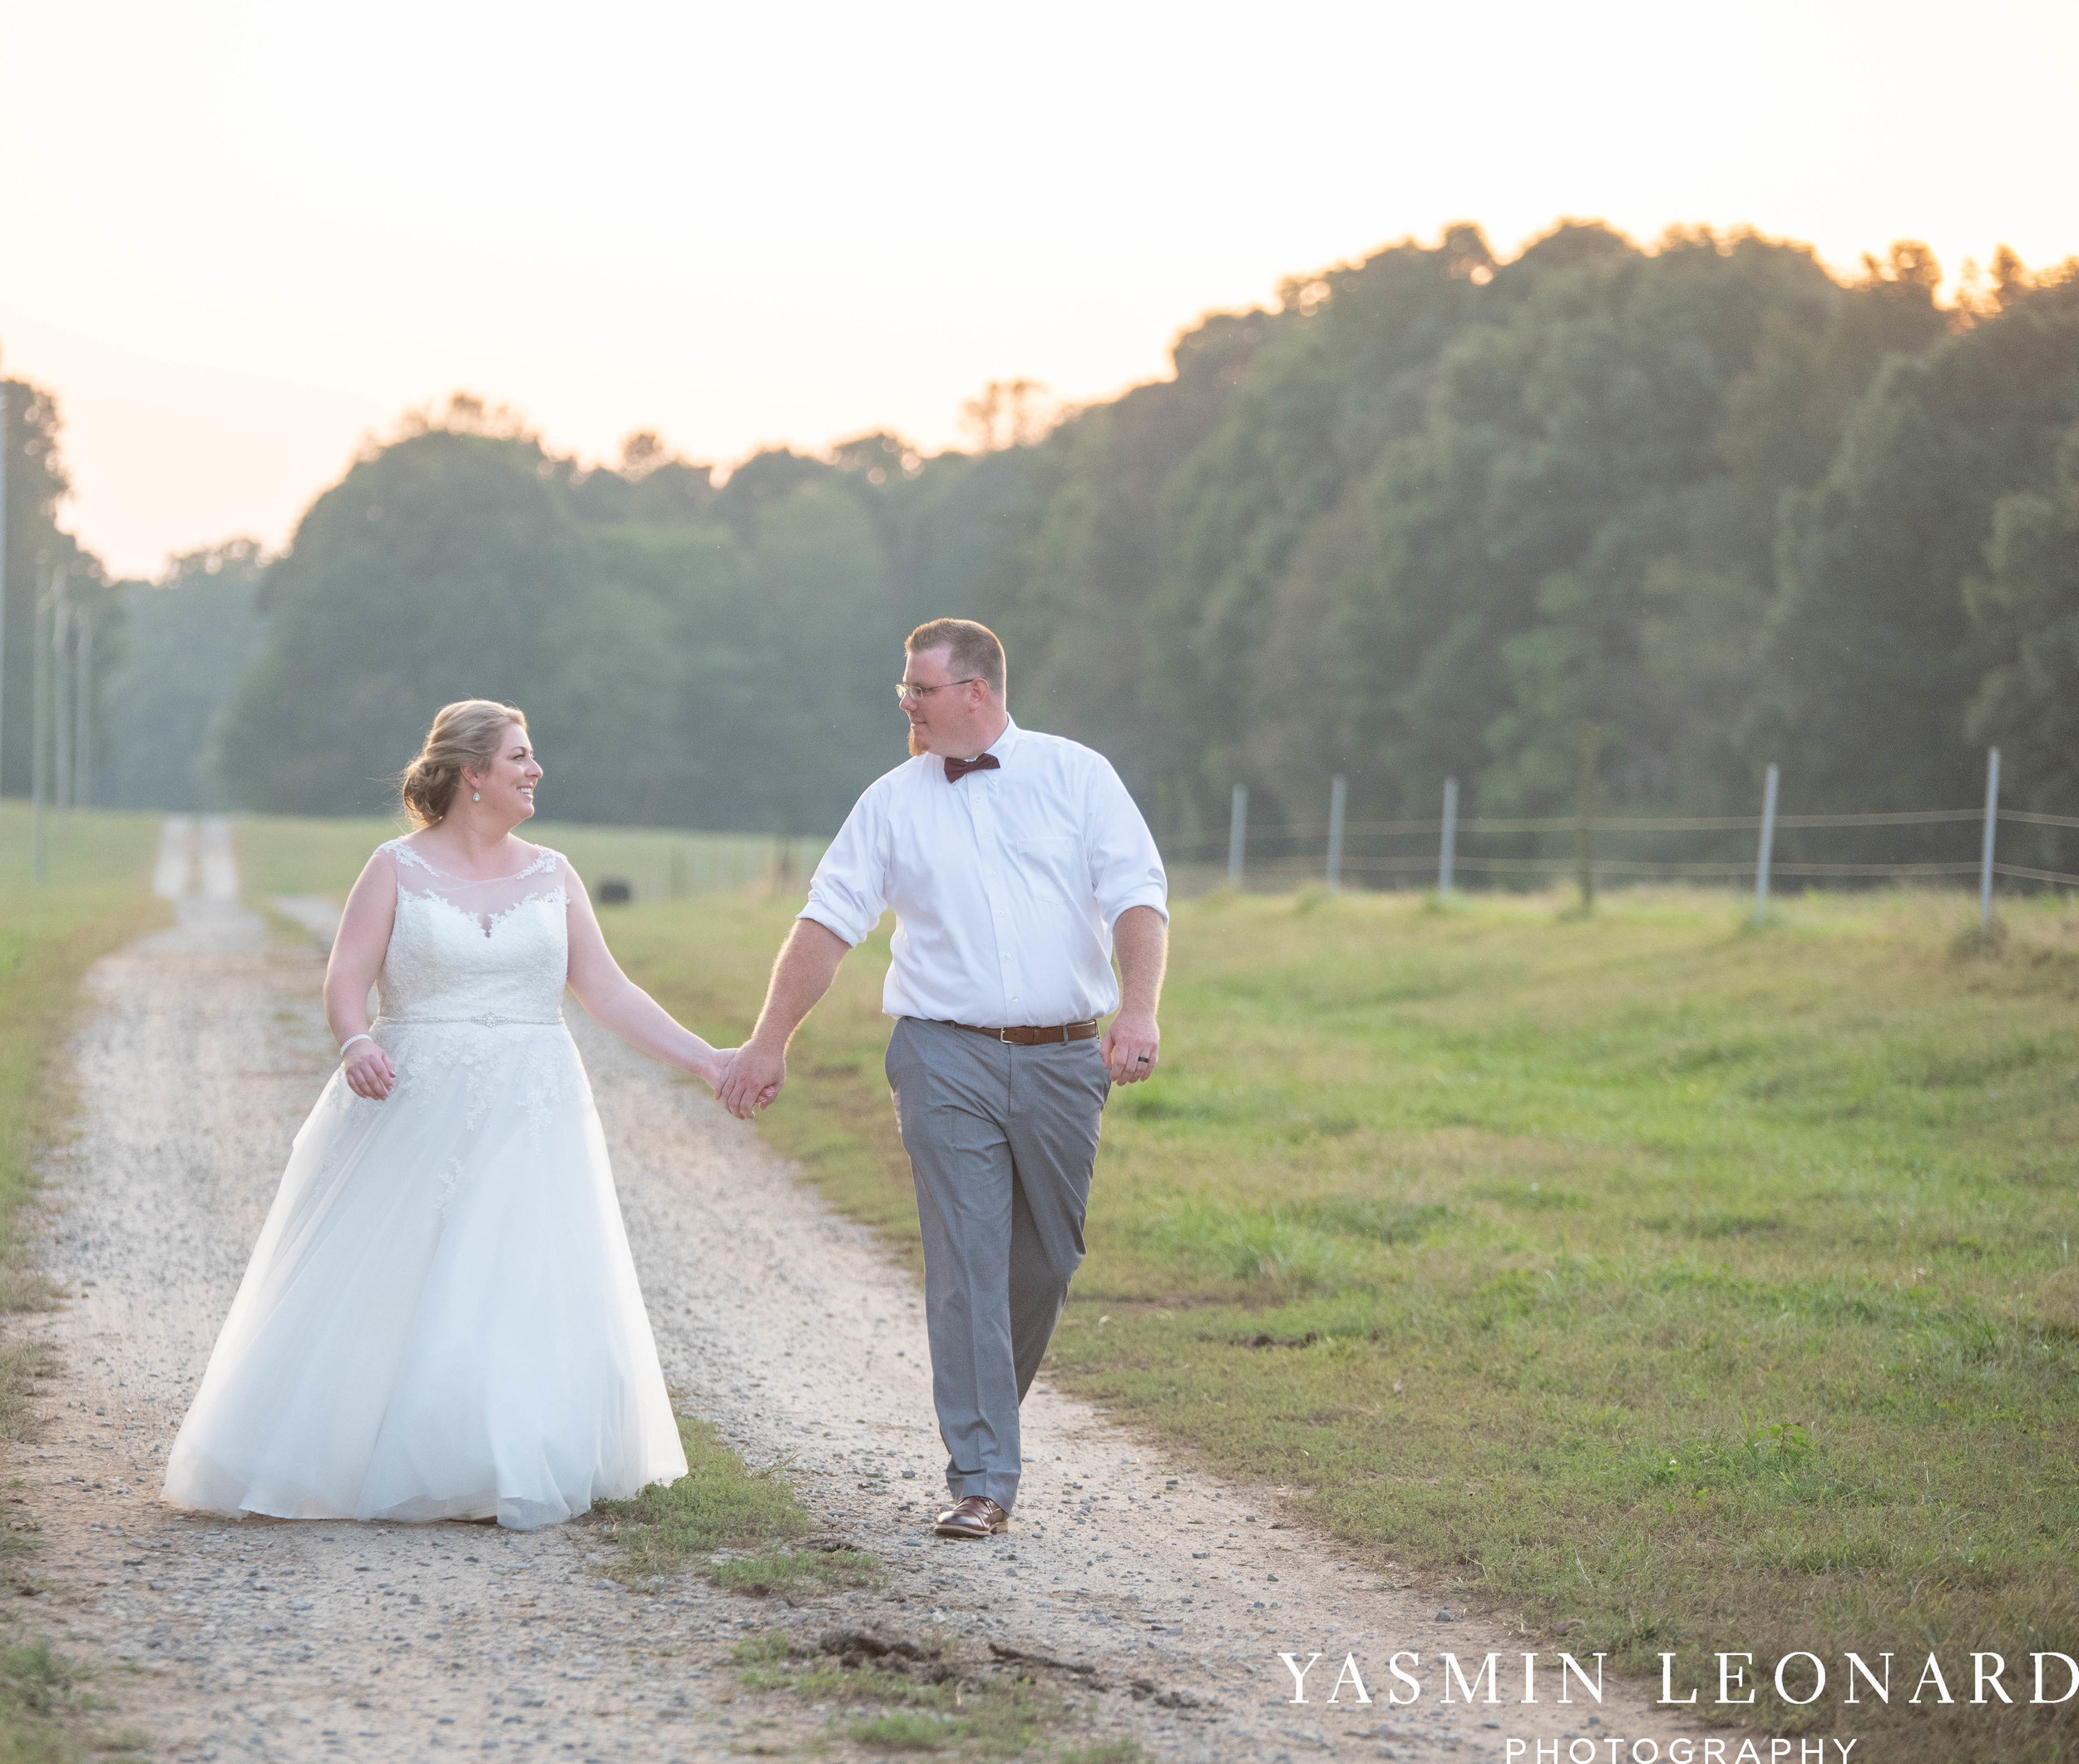 Danner Farms - NC Wedding Venues - NC Barns - Statesville NC - NC Wedding Photographer - High Point Wedding Photographer - Yasmin Leonard Photography-55.jpg